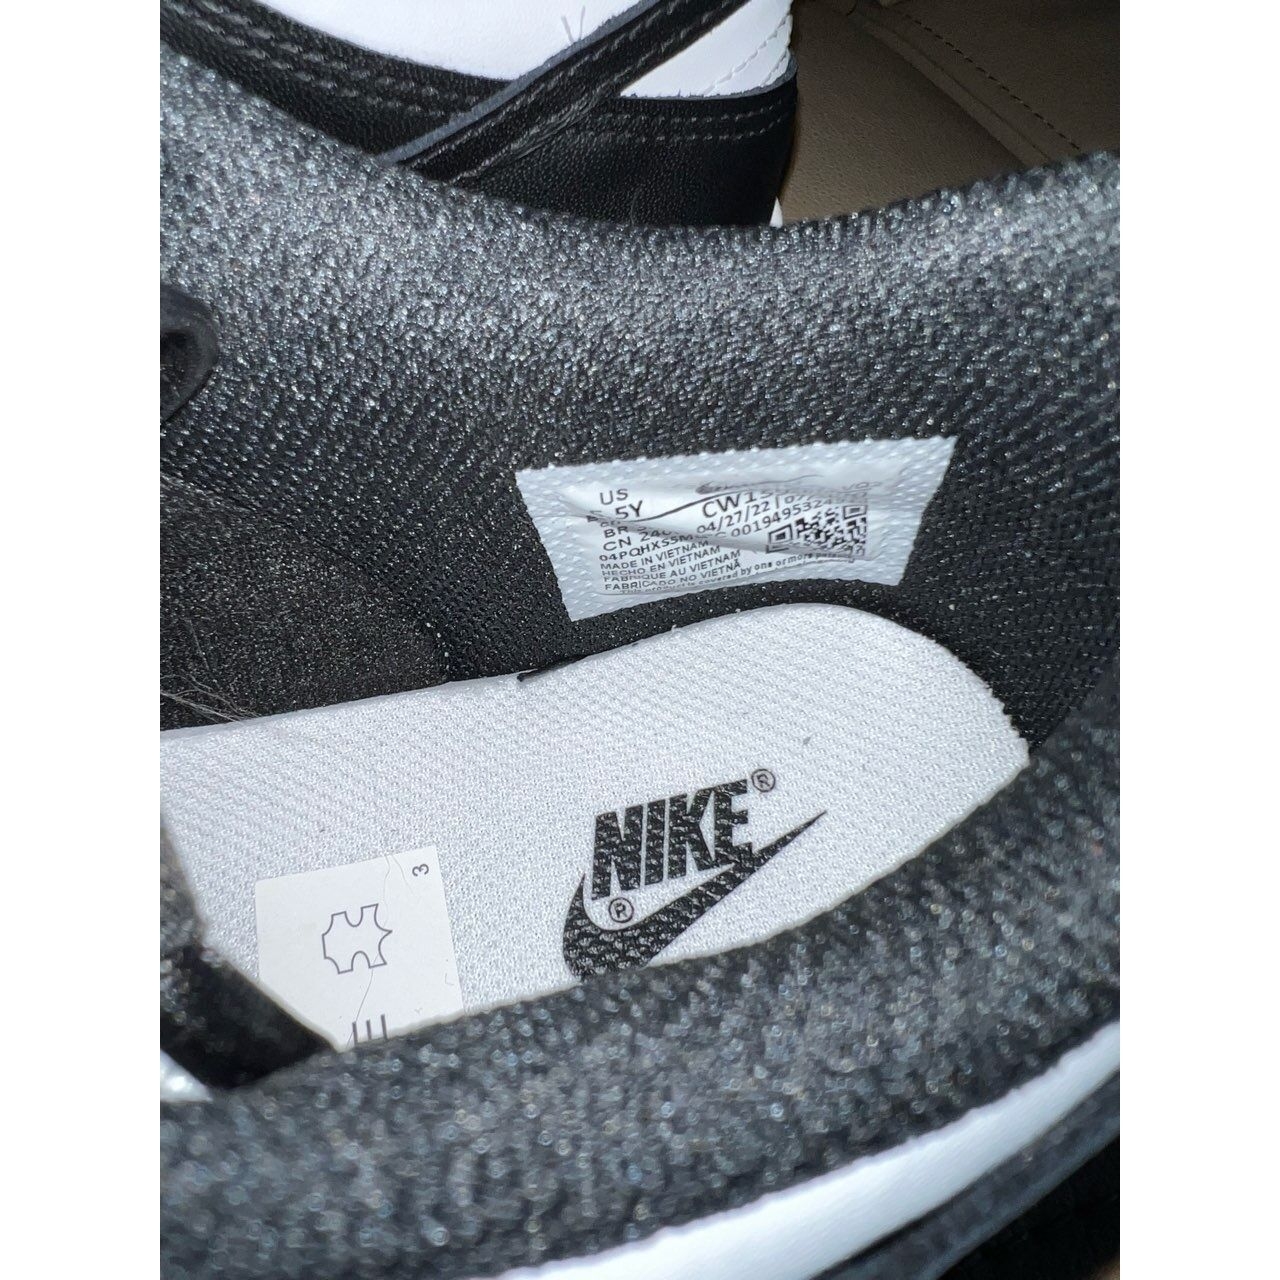 Nike Black & White Sneakers